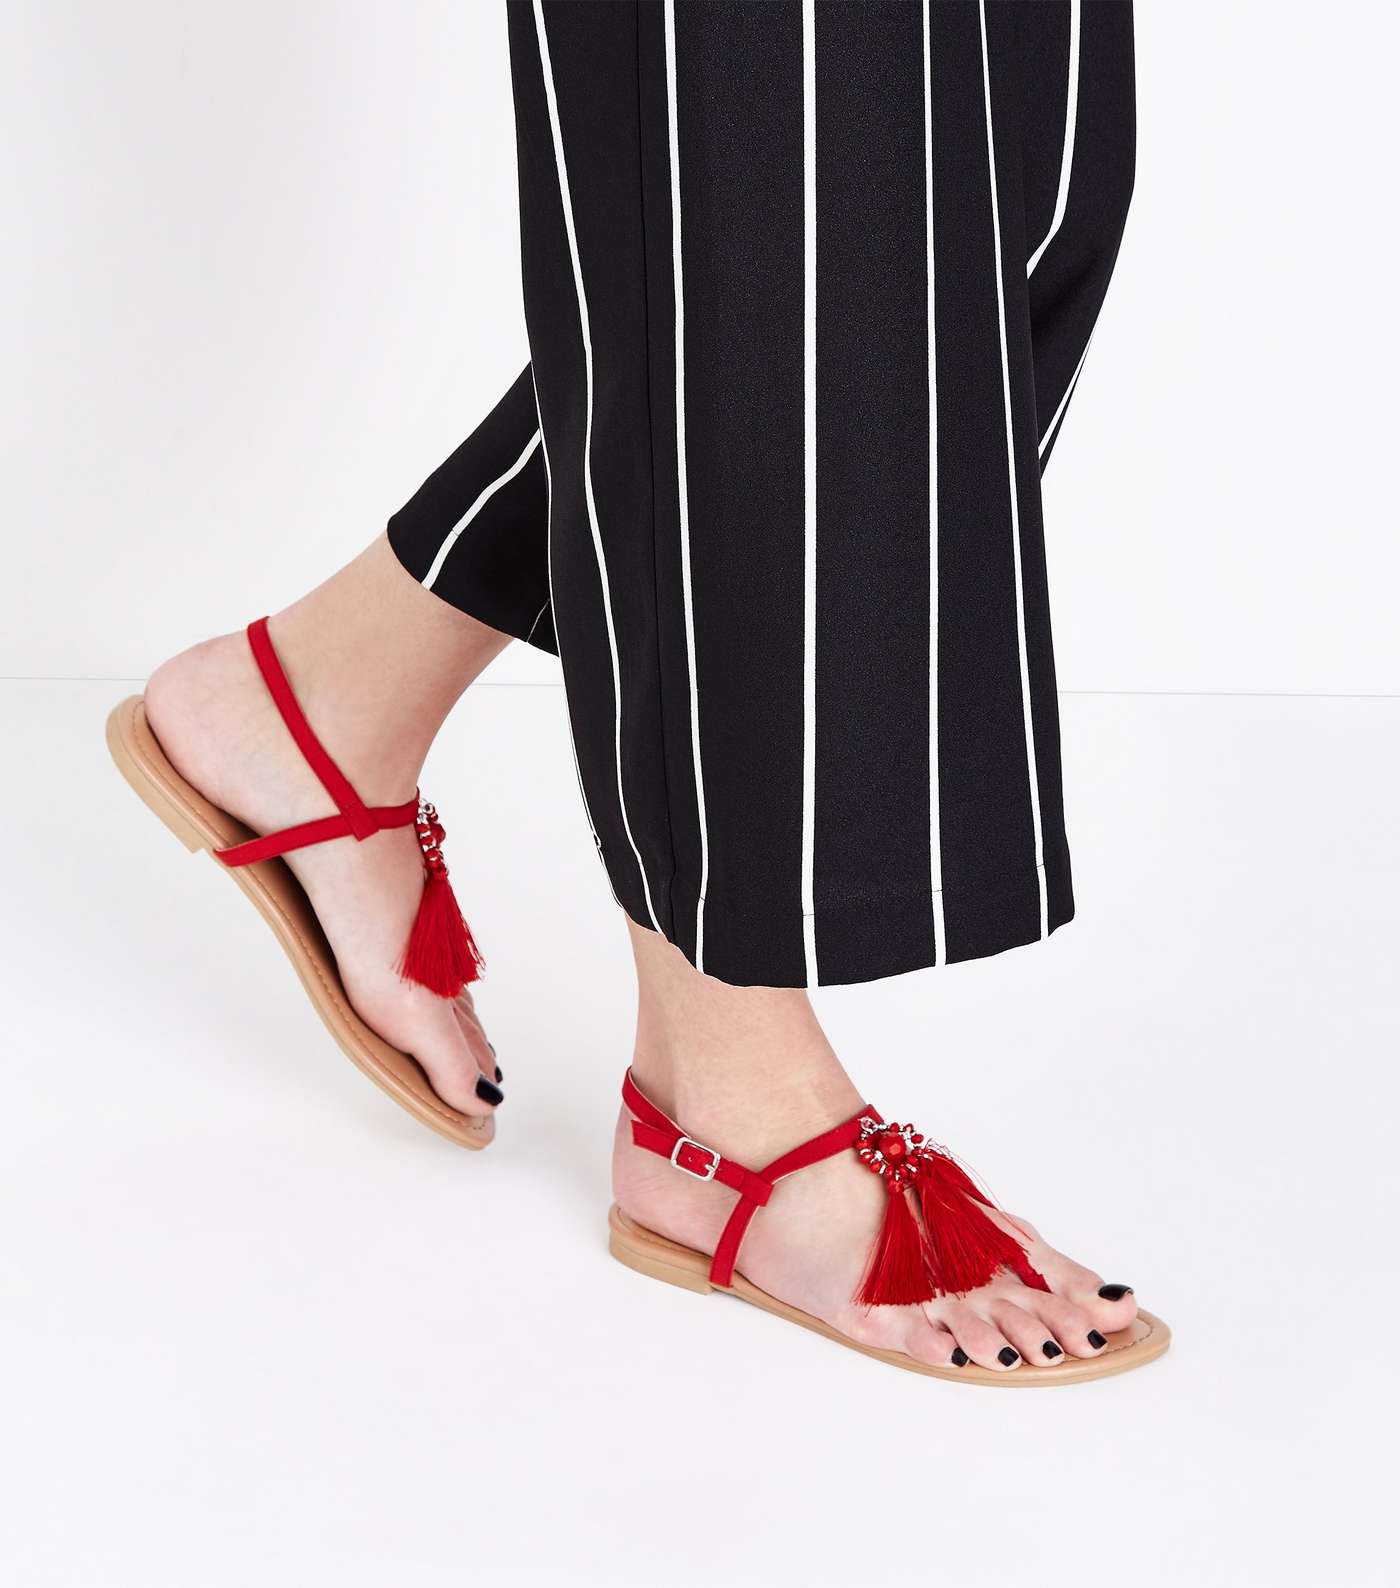 Wide Fit Red Suedette Tassel Sandals Image 2